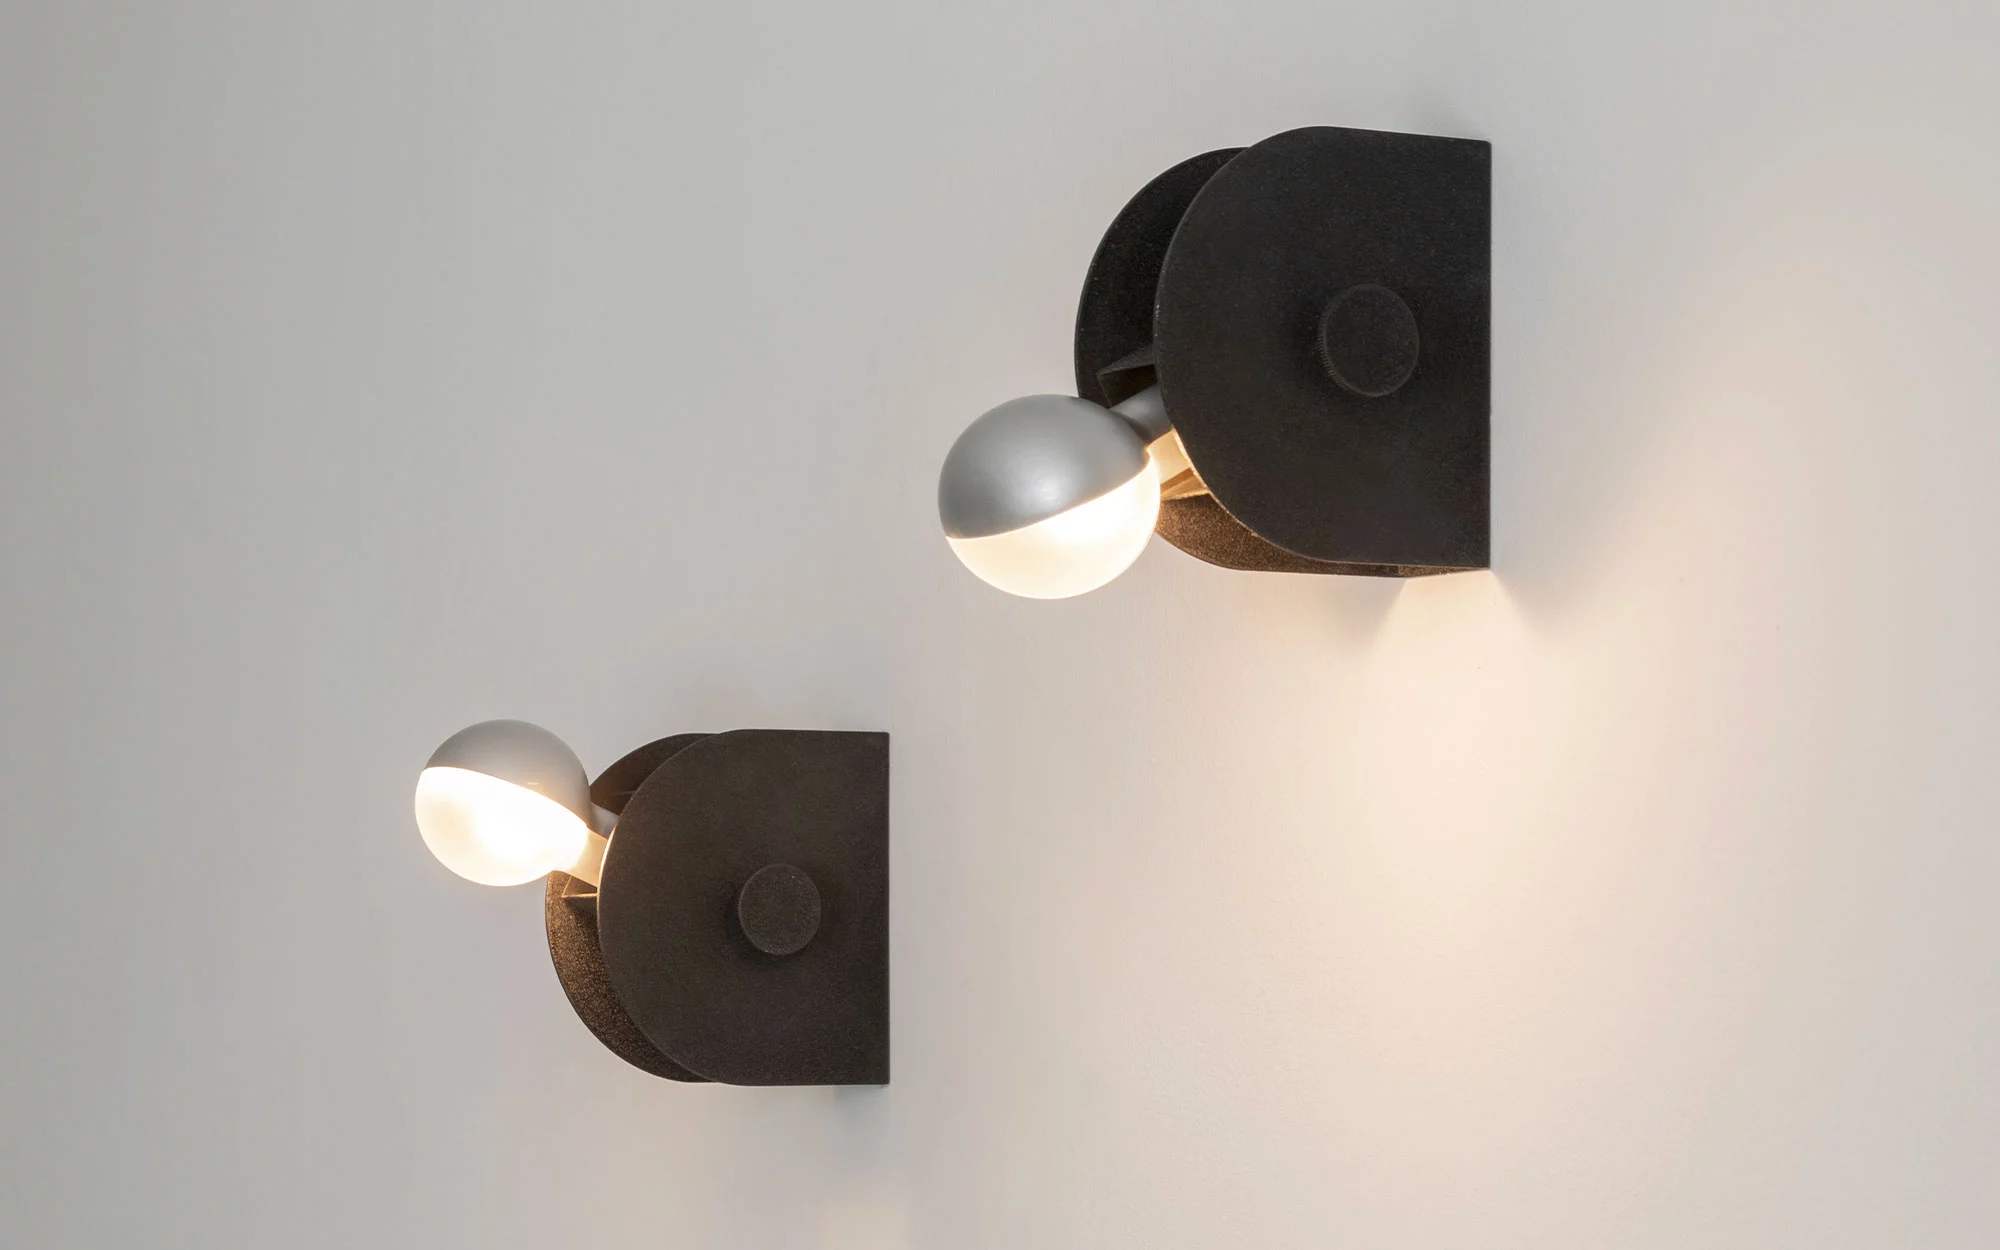 43 - Gino Sarfatti - wall-light - Galerie kreo